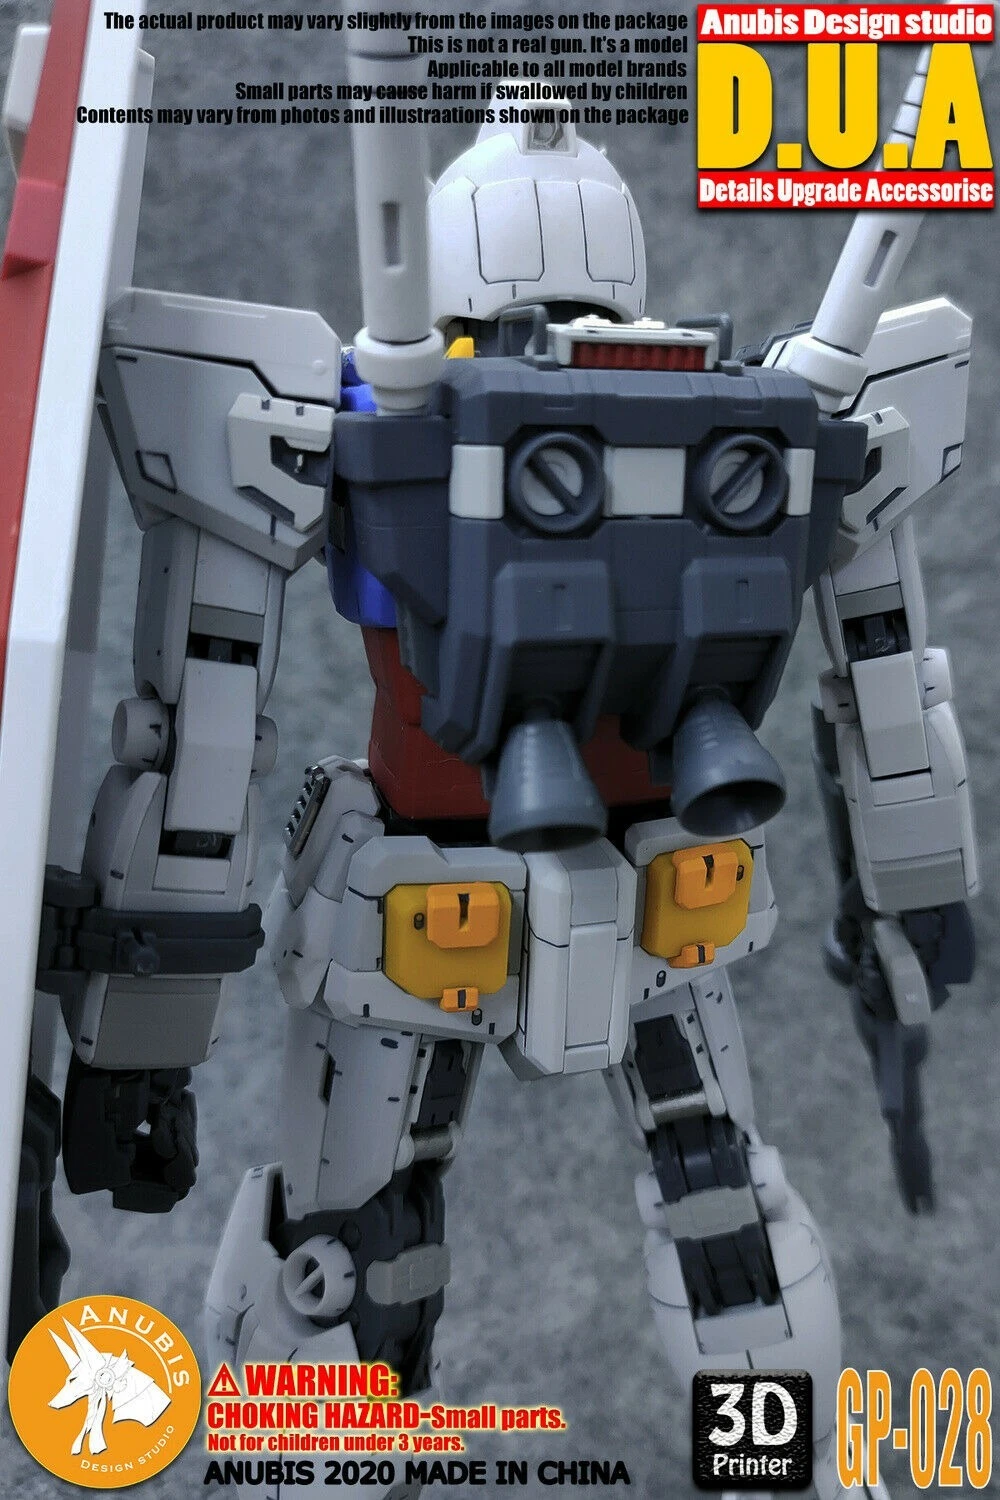 Detail upgrade For Bandai MG RX78 3.0 Gundam Gunpla 1/100 scale model kit